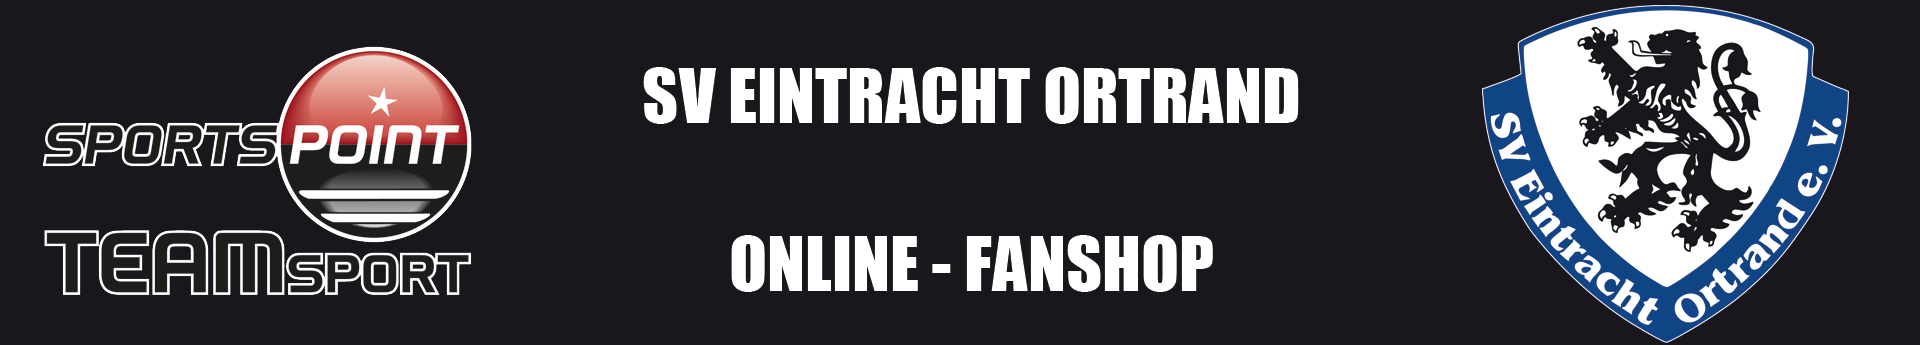 Eintracht Ortrand Title Image